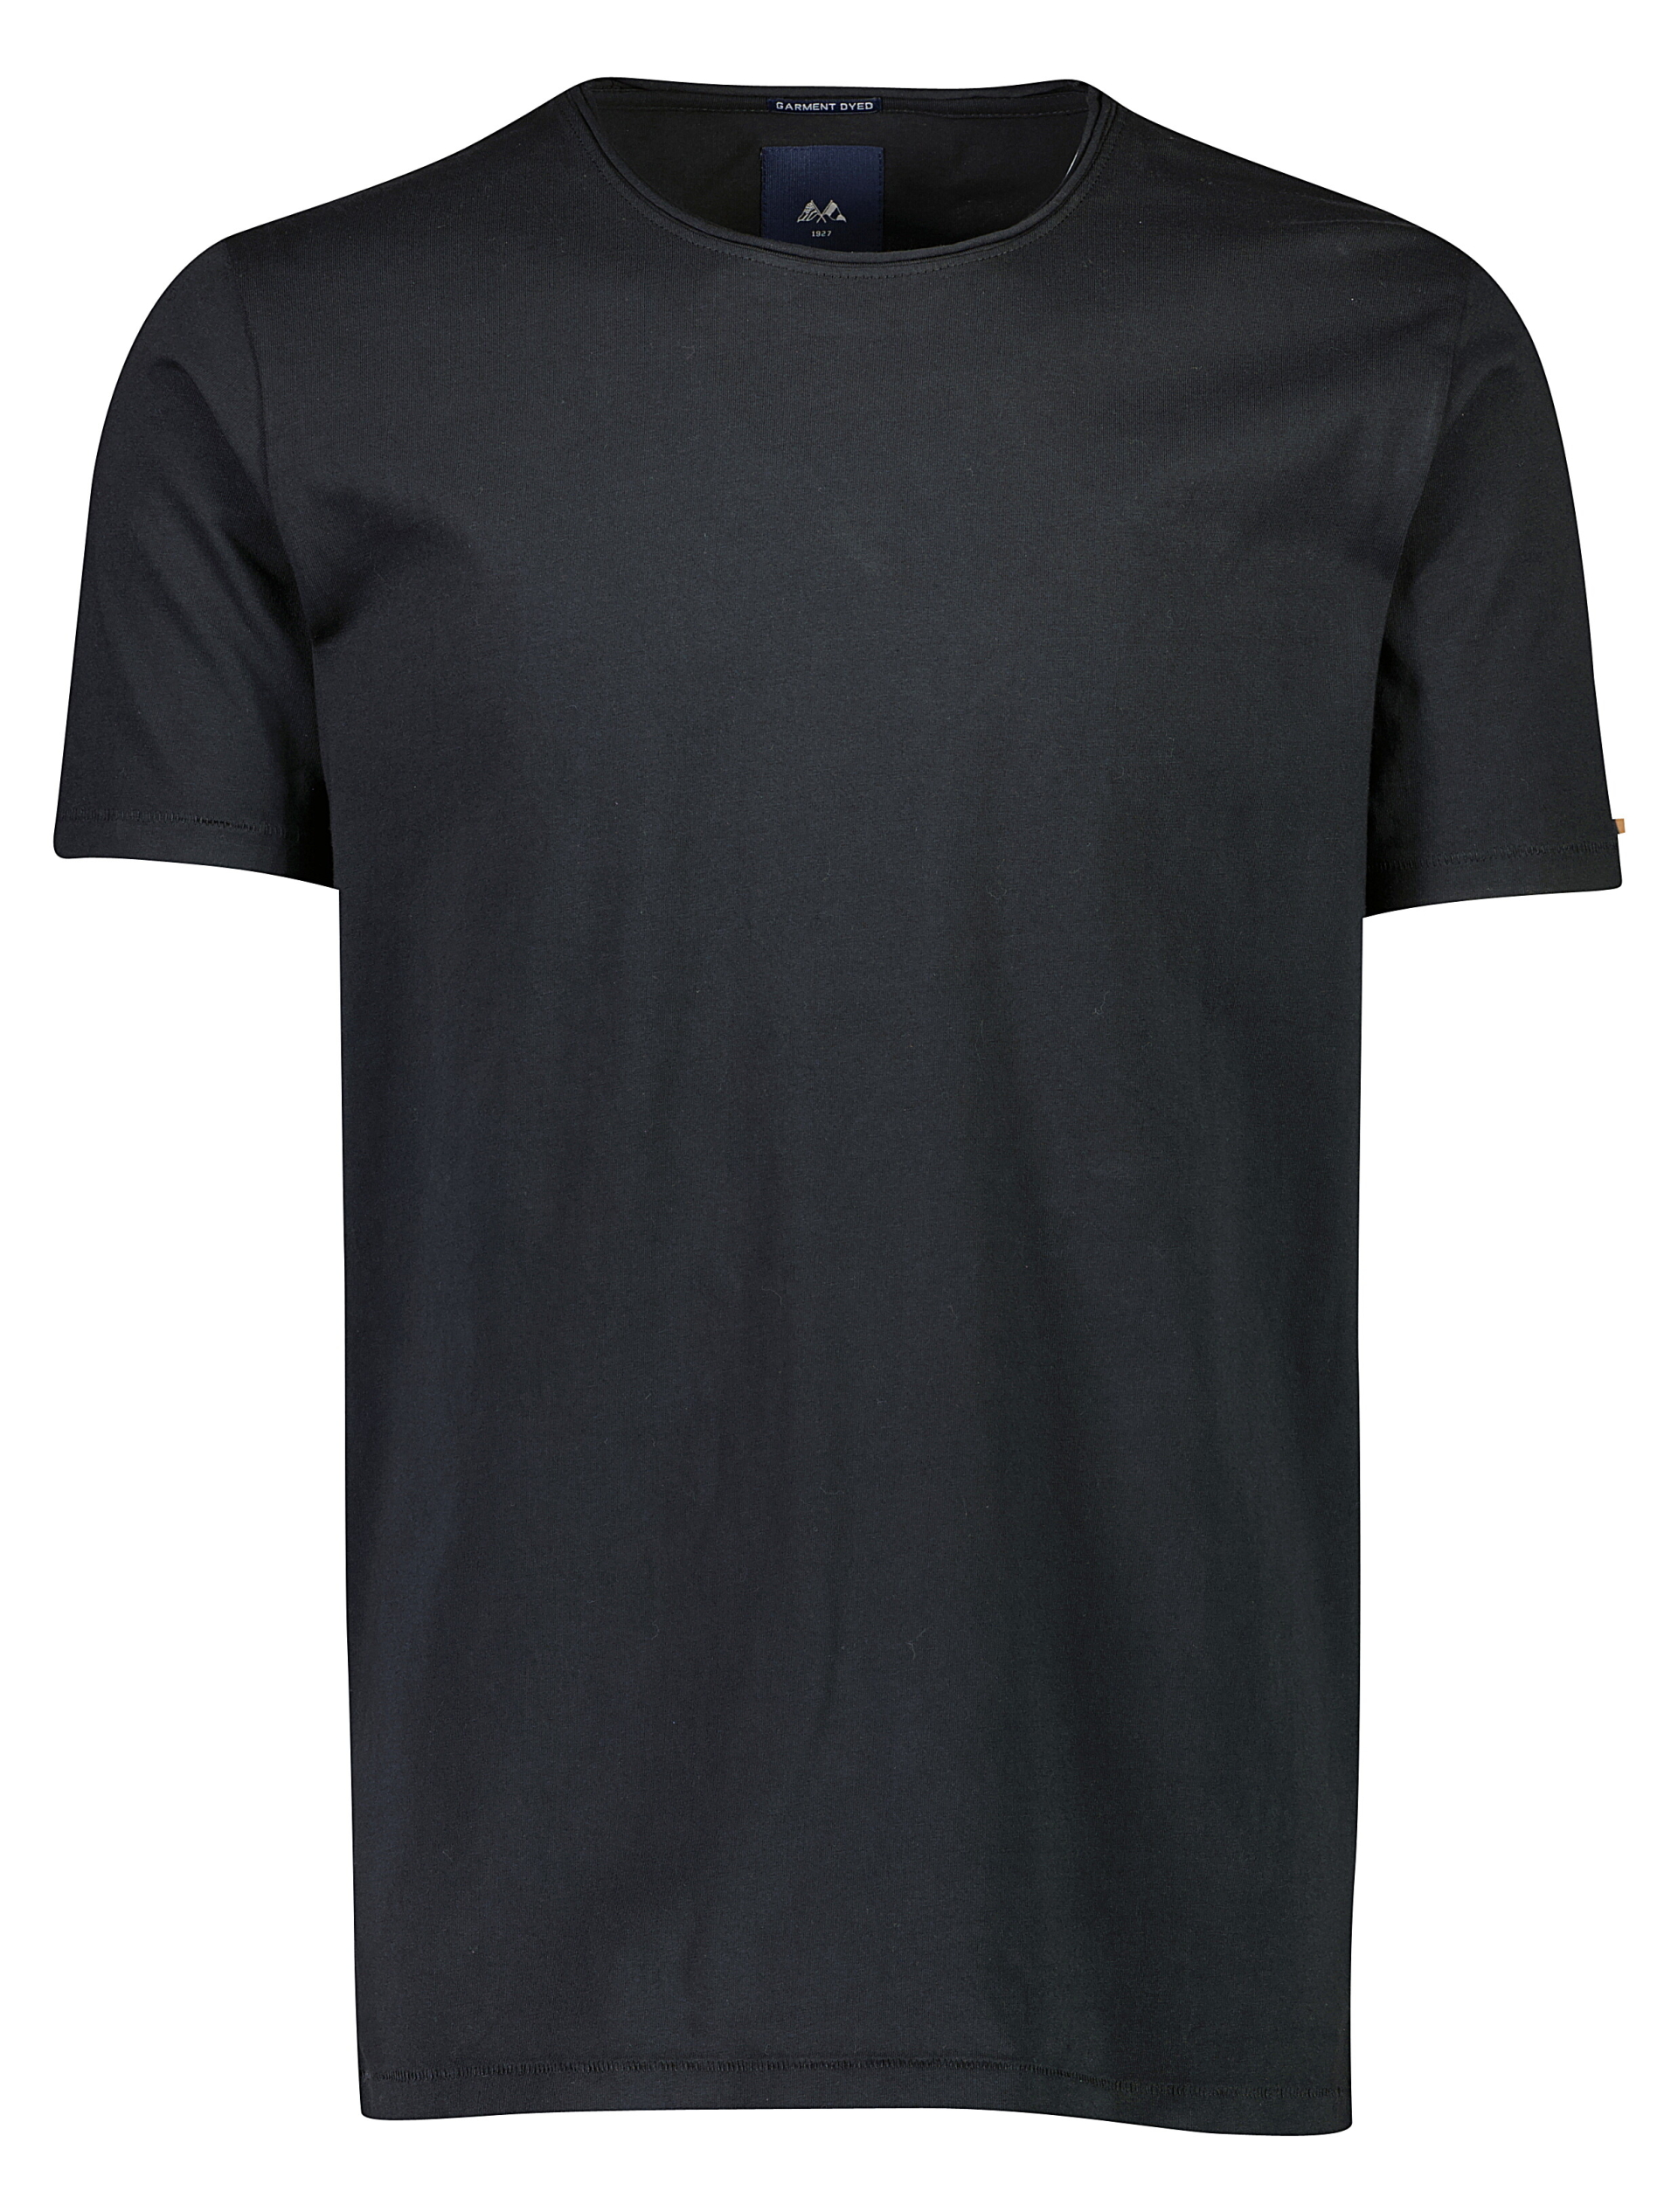 Lindbergh T-shirt sort / dusty black